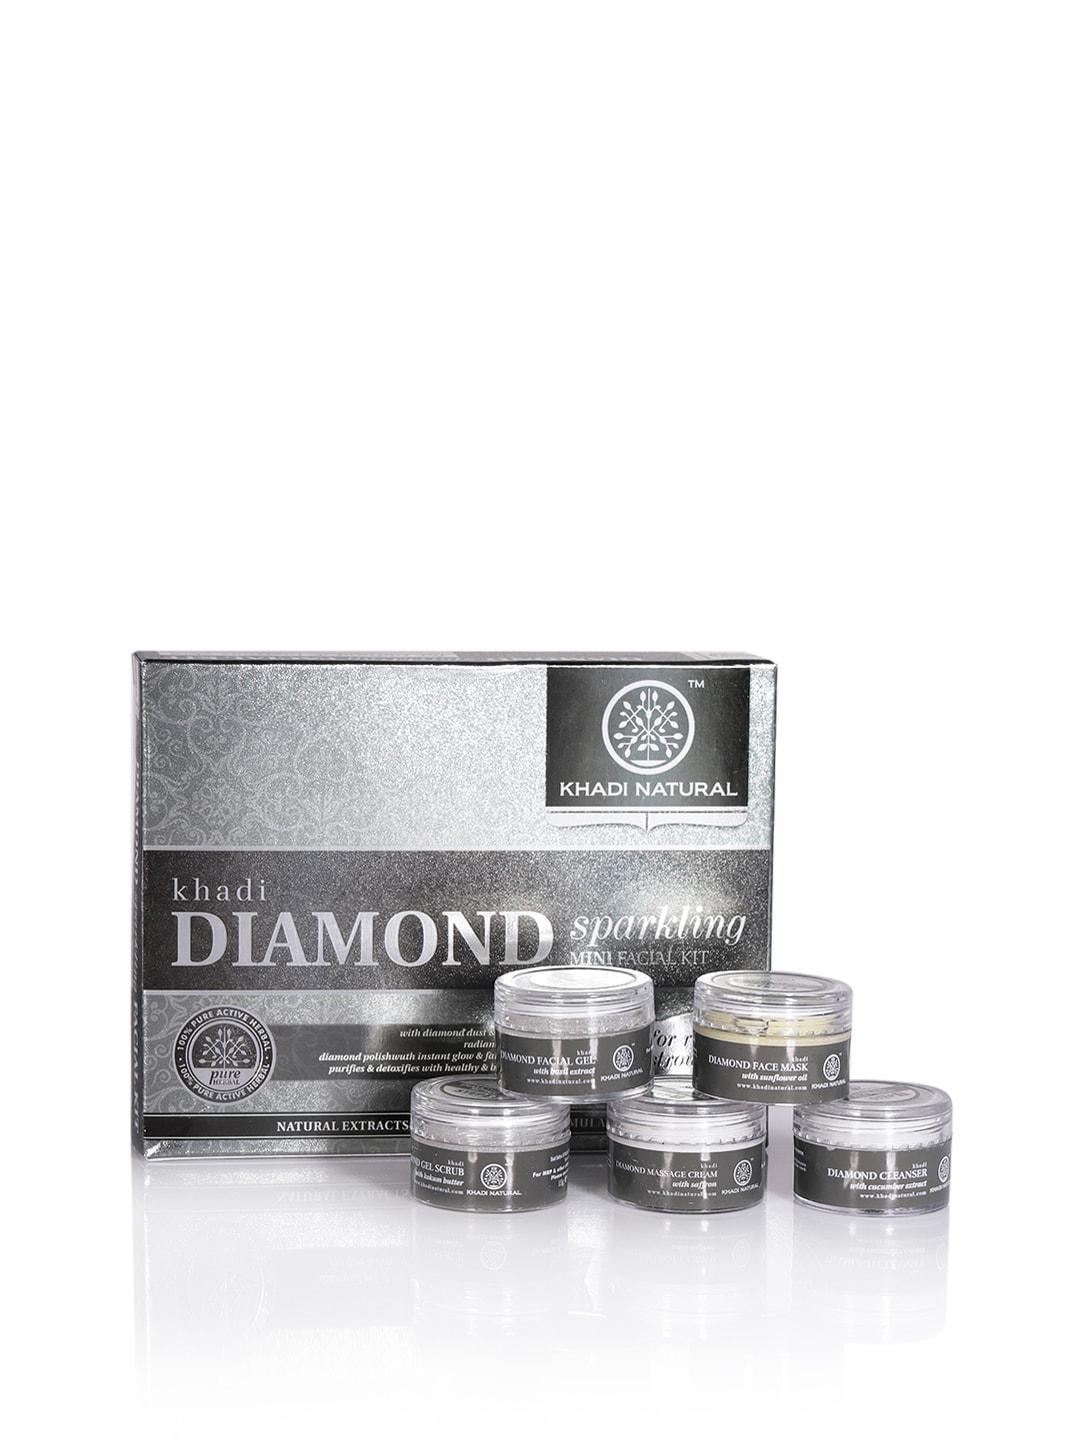 khadi-natural-sustainable-diamond-sparkling-mini-facial-kit